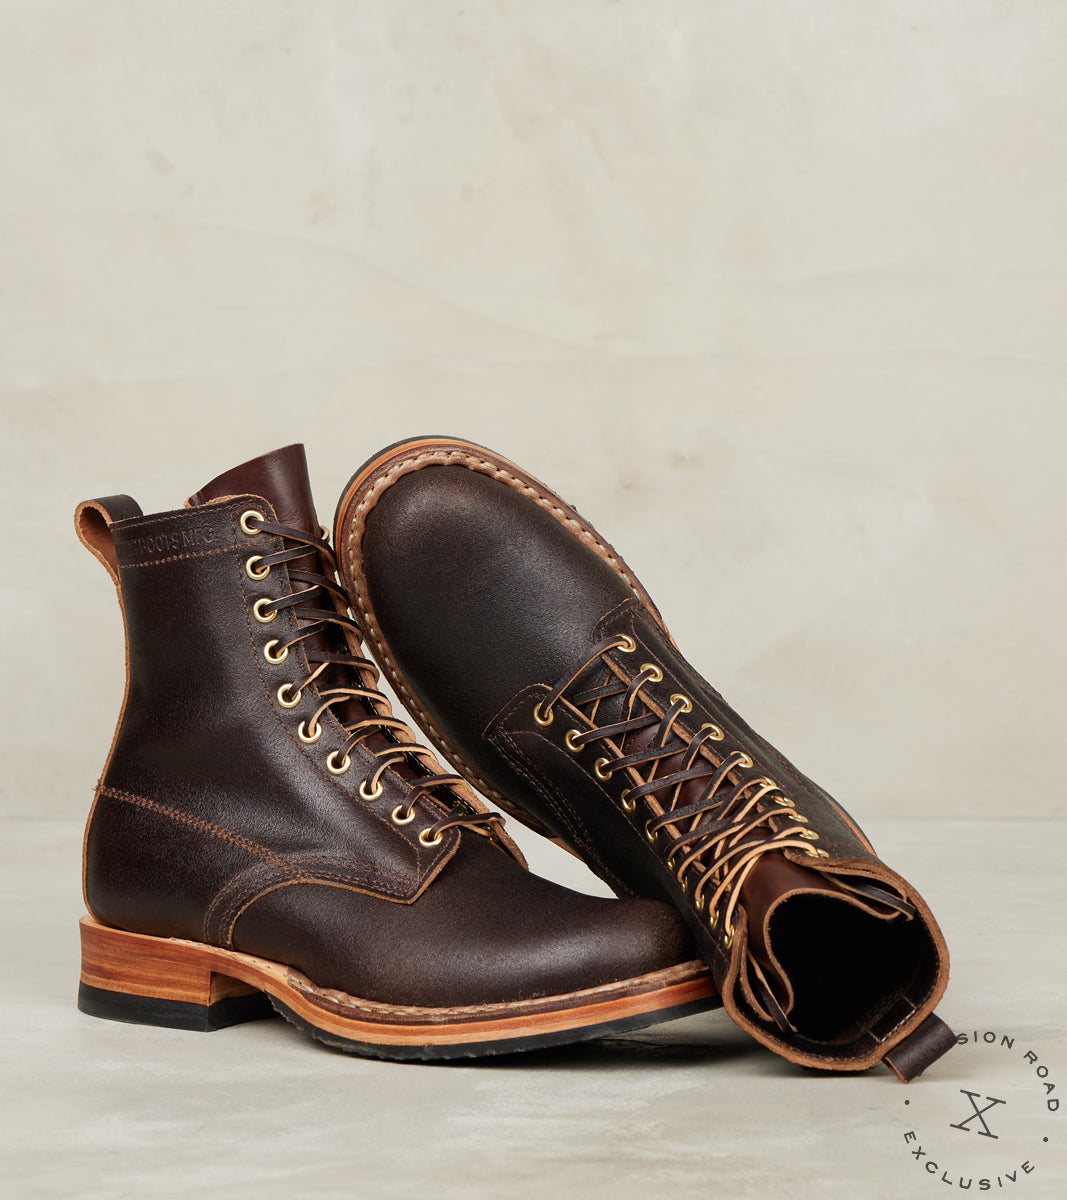 brown dress boots